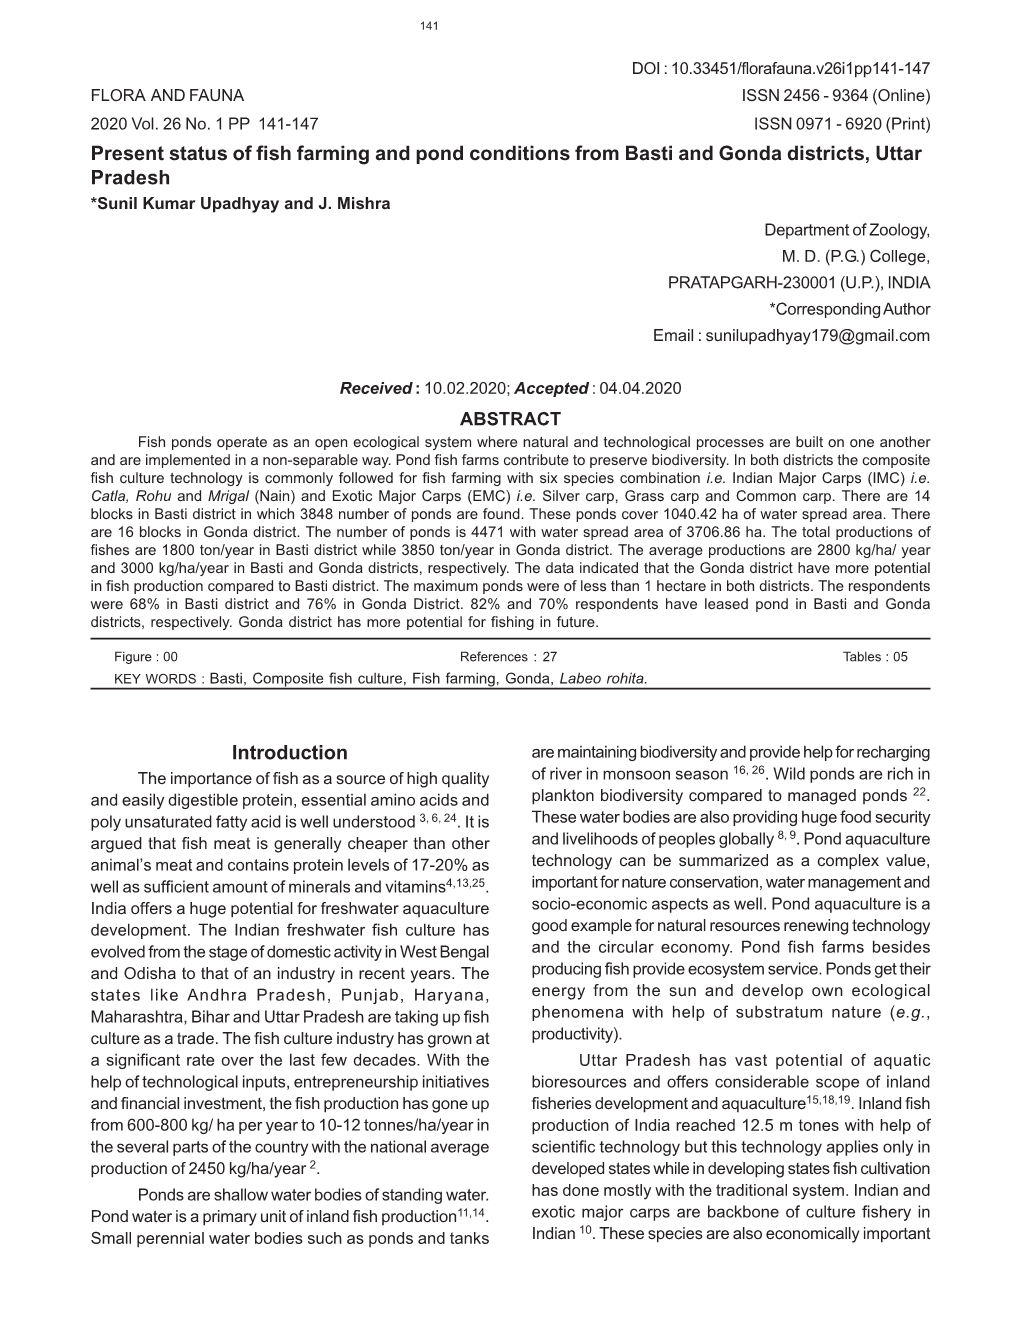 Present Status of Fish Farming and Pond Conditions from Basti and Gonda Districts, Uttar Pradesh *Sunil Kumar Upadhyay and J